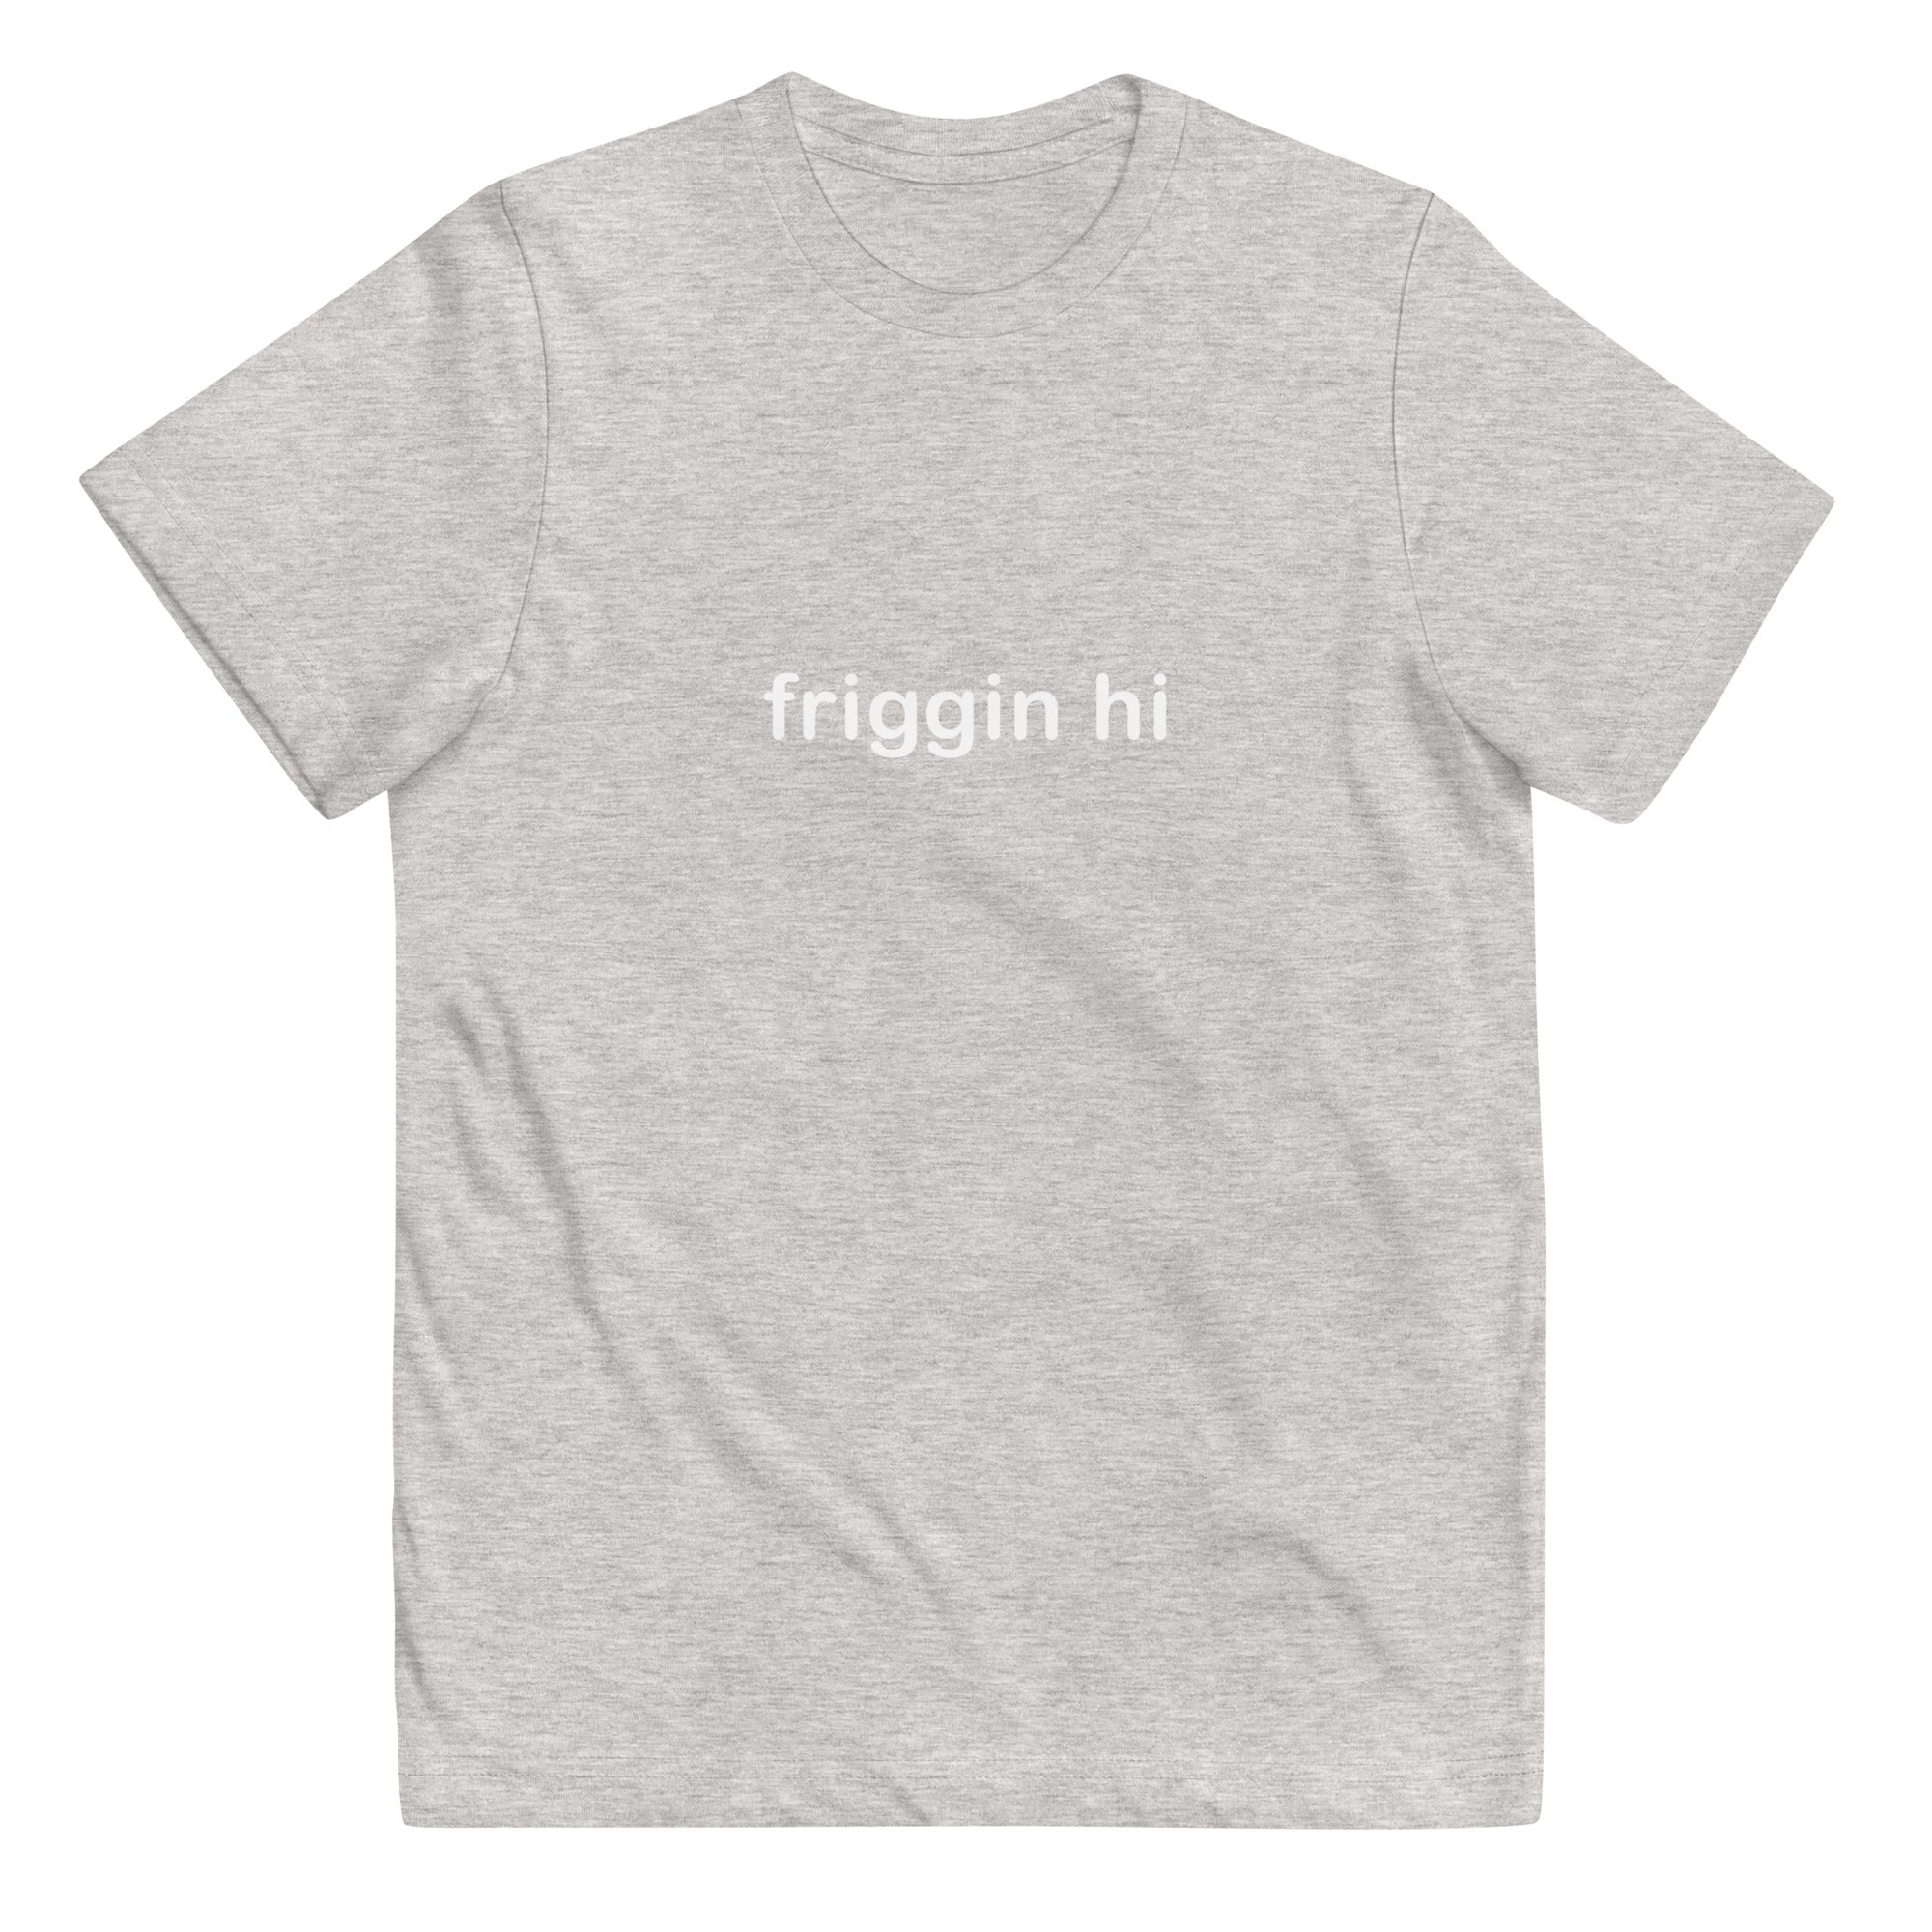 "Friggin Hi, Friggin Bye" White Text Youth jersey t-shirt